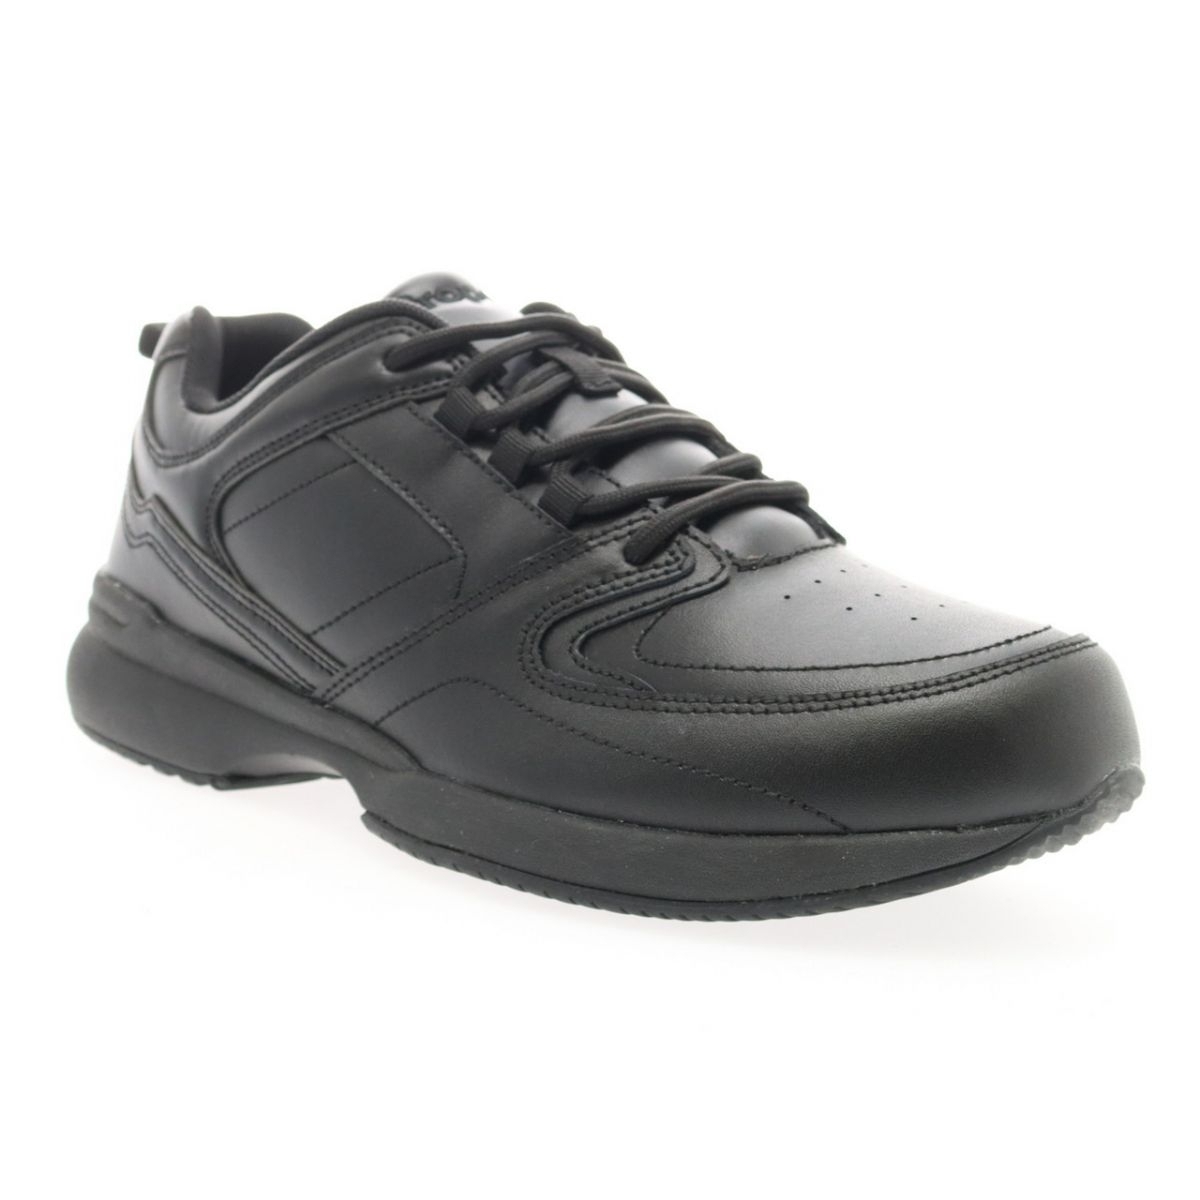 Propet Men's Life Walker Sport Sneaker Black - MAA272LBLK BLACK - BLACK, 8